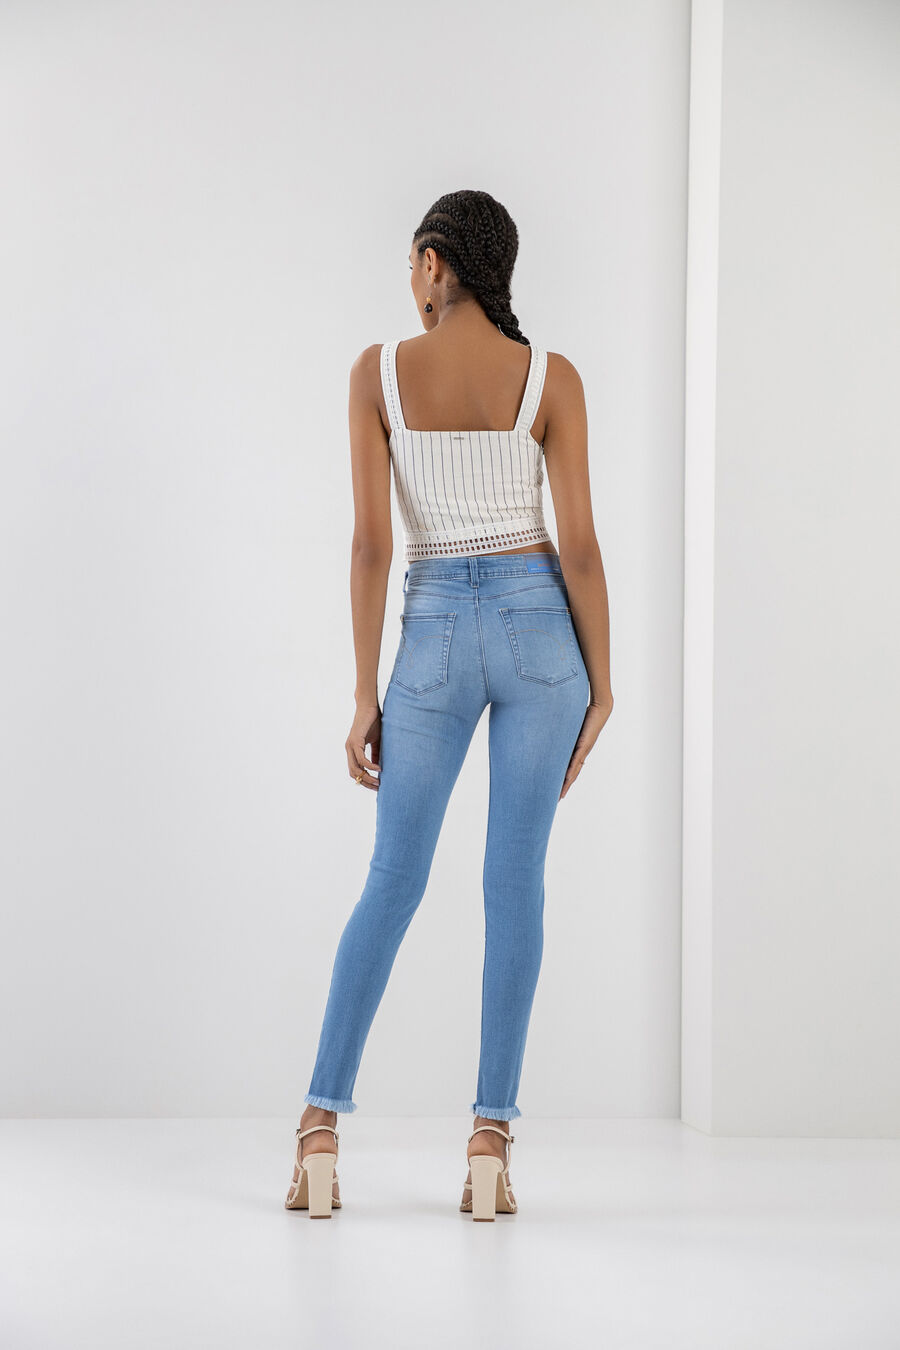 Calça Jeans Skinny Cropped com Barra Desfiada, JEANS, large.